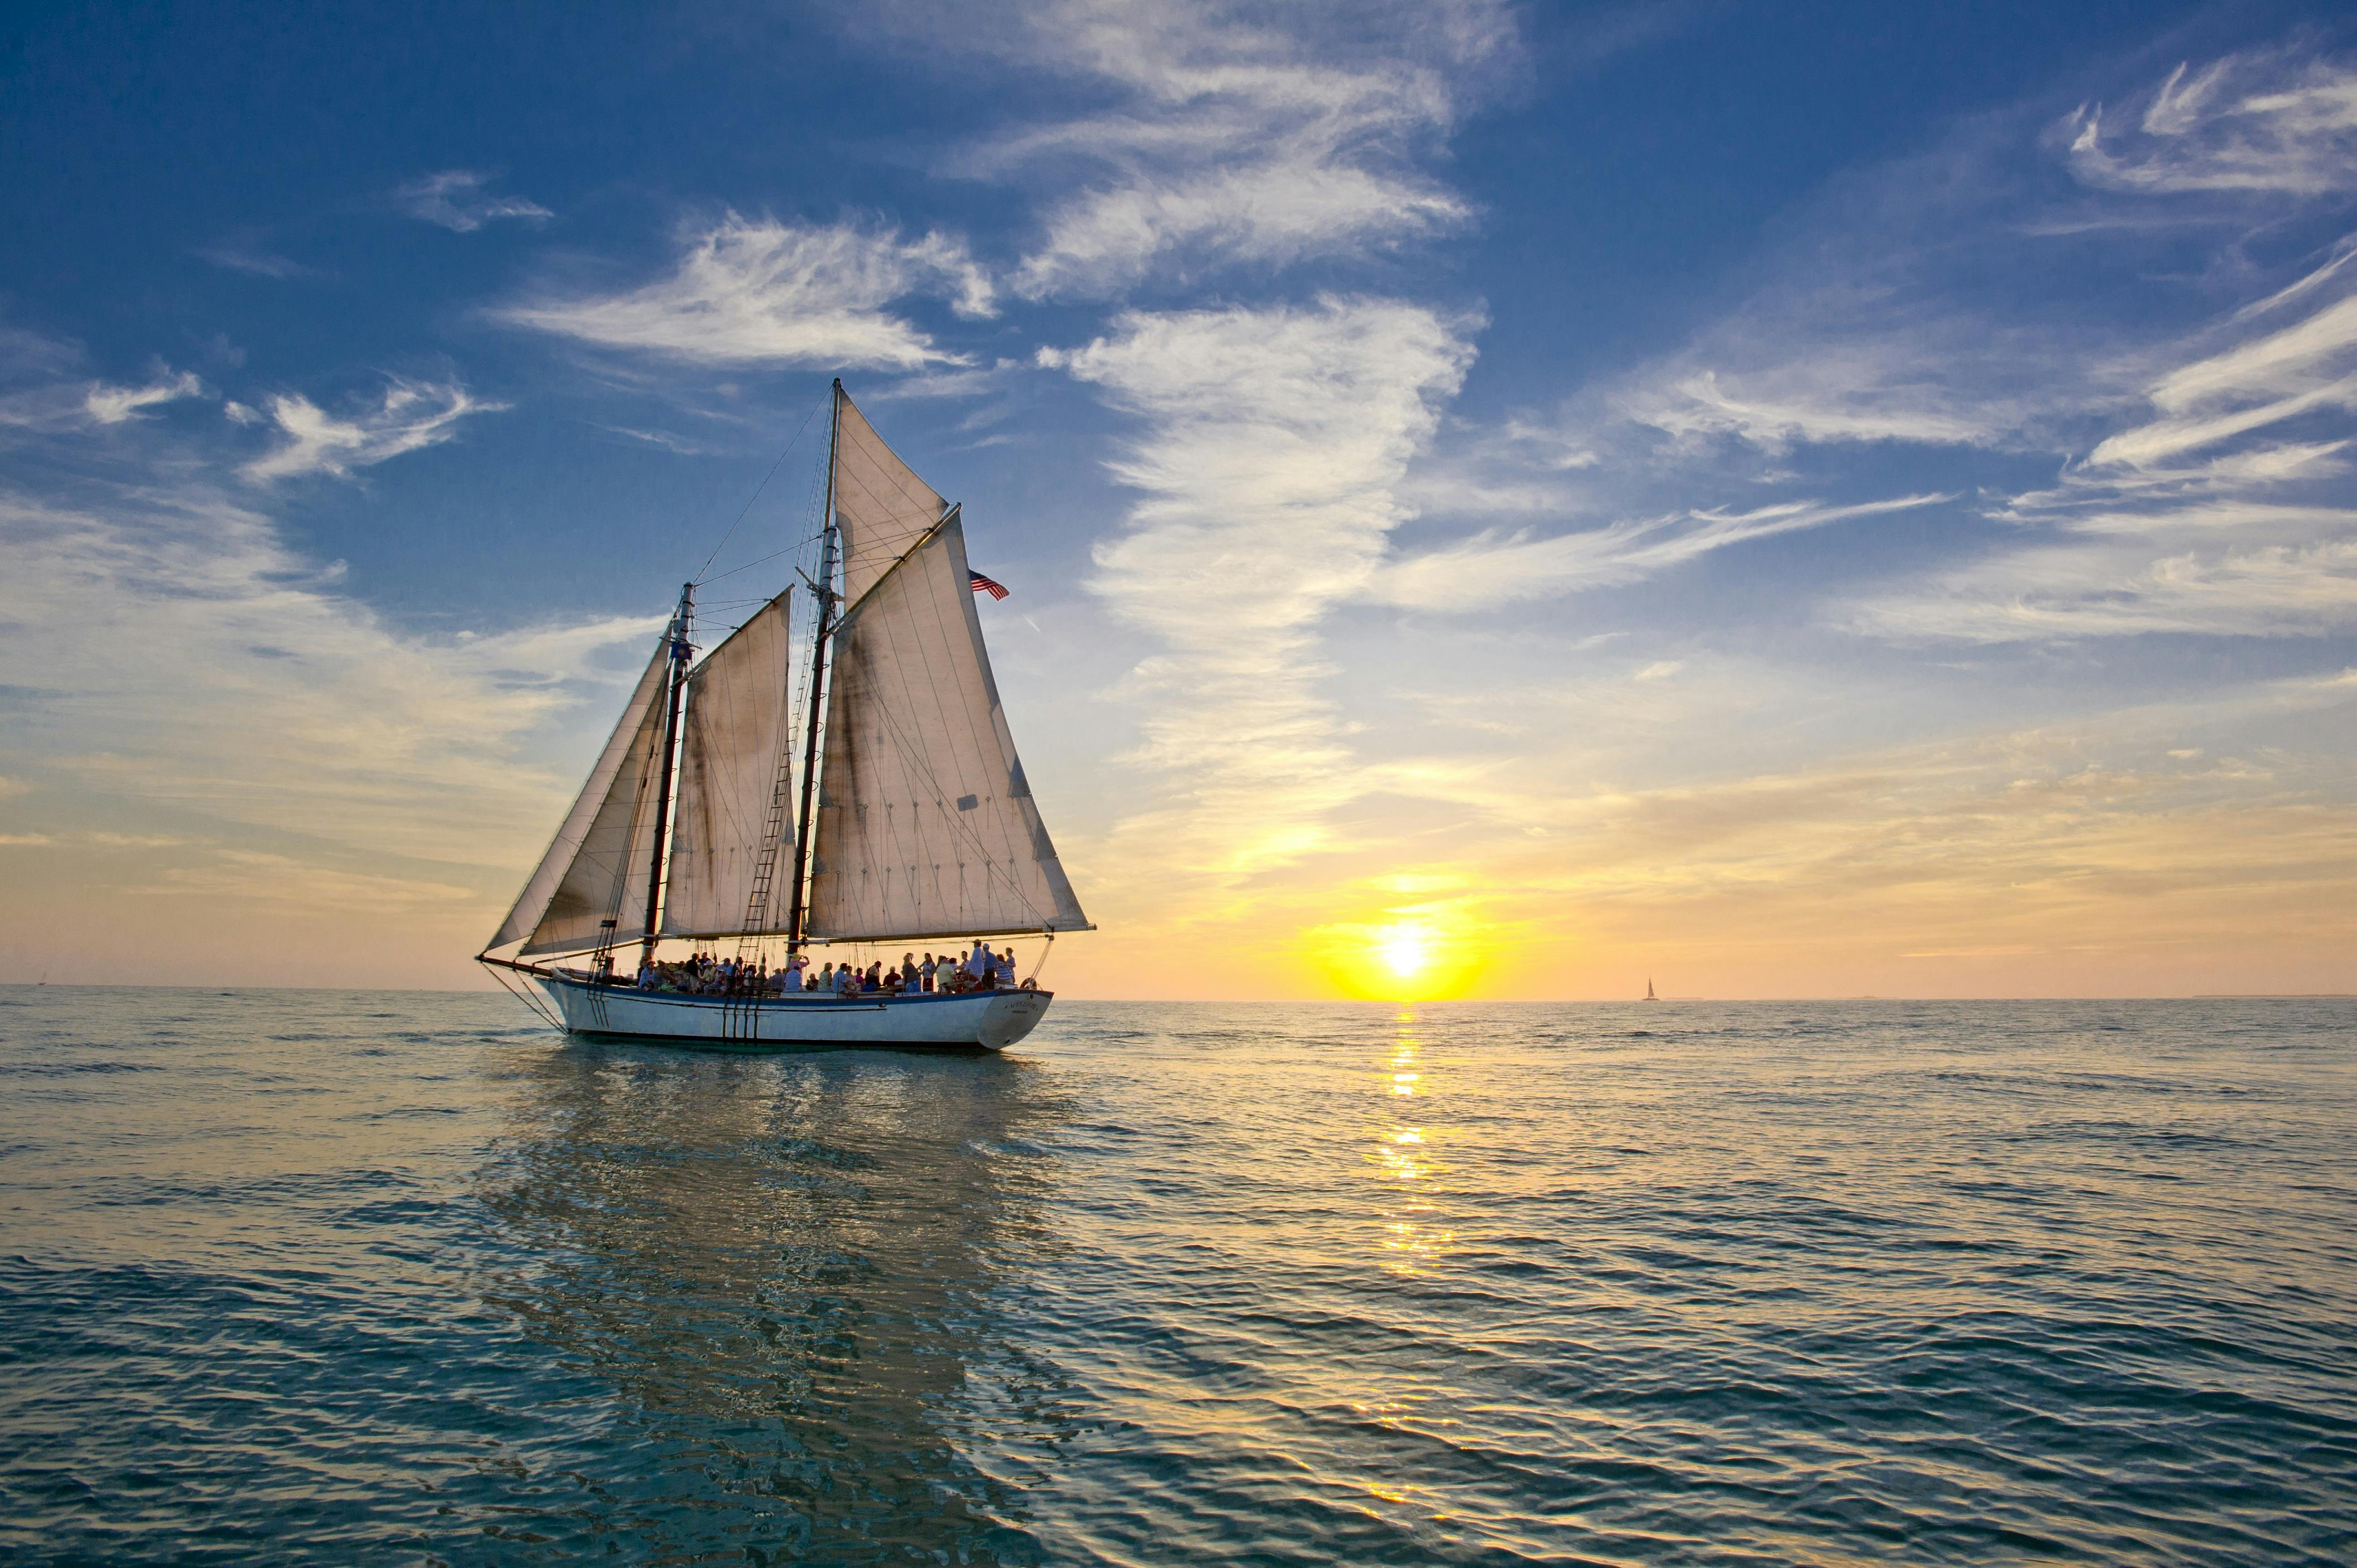 Windjammer classic sunset sail